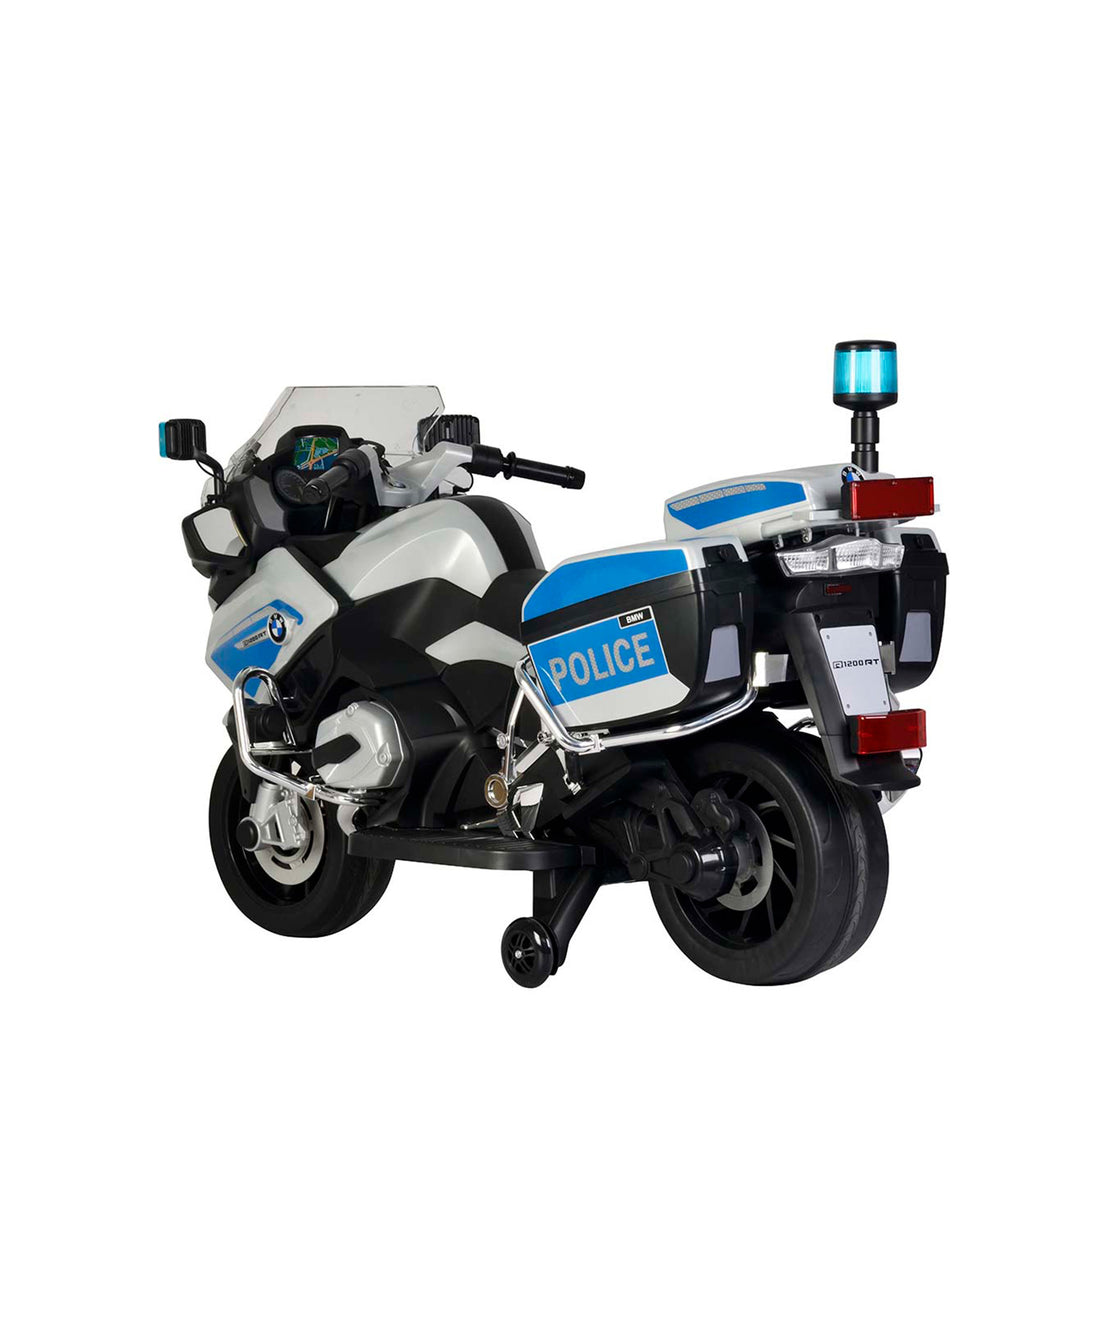 Motocicleta Elétrica Infantil - BMW R 1200